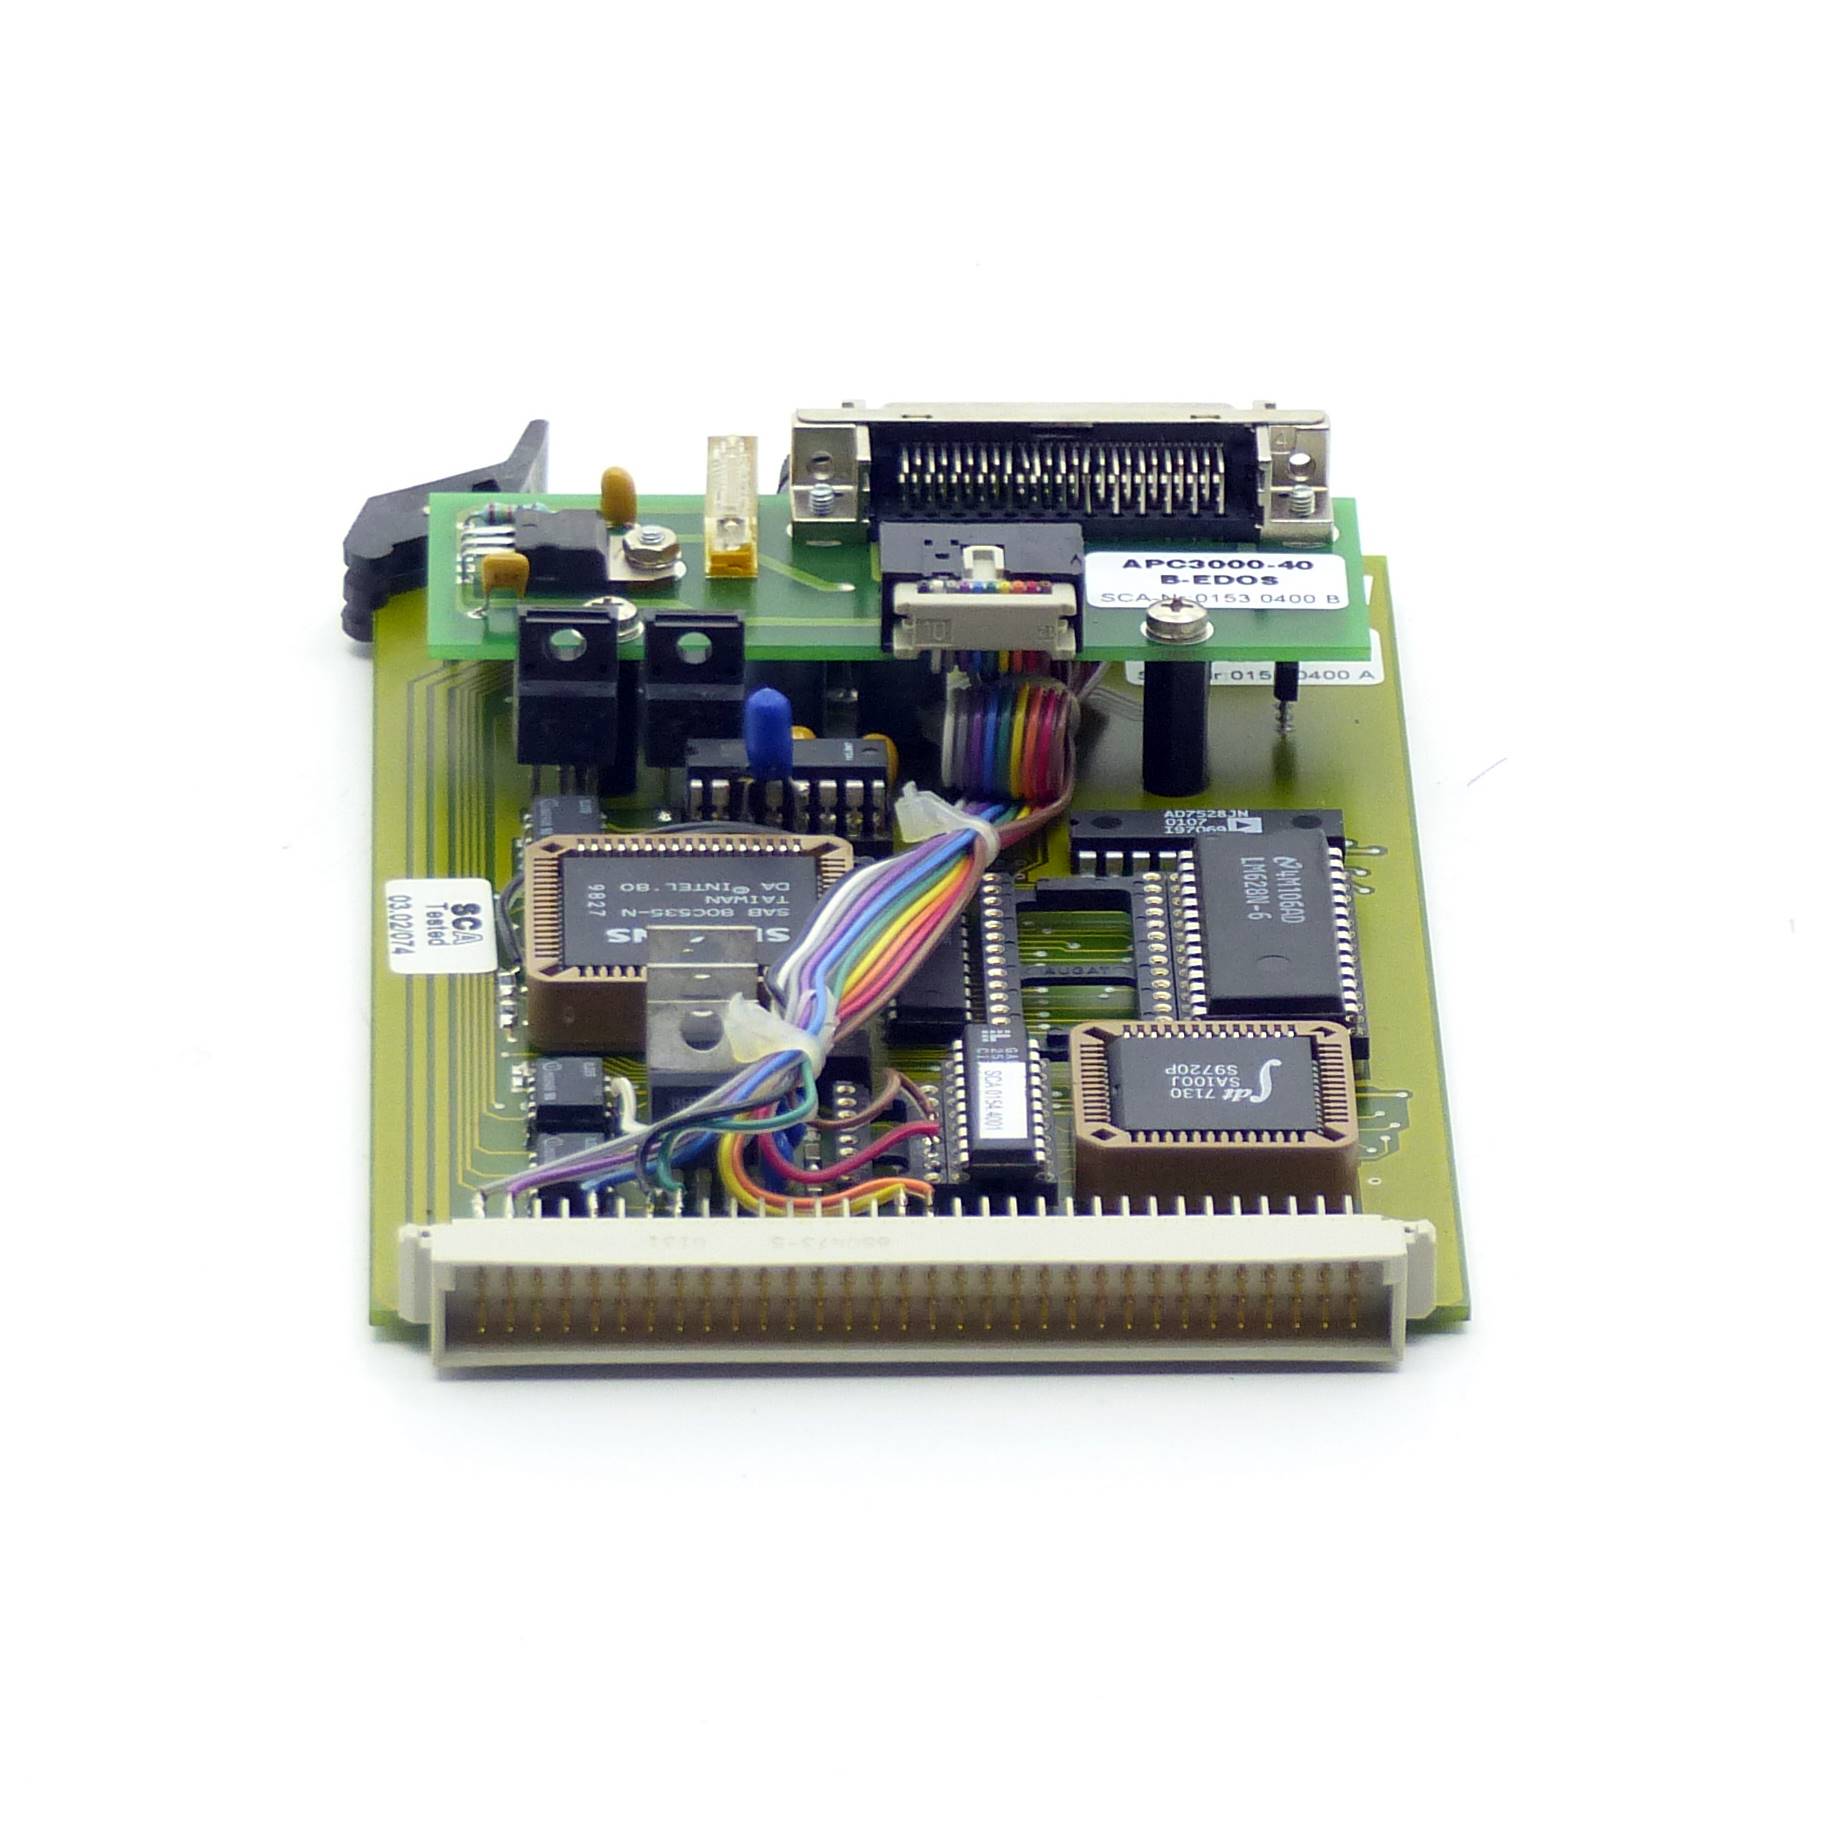 PC BOARD APC-3000-40 B-EDOS 